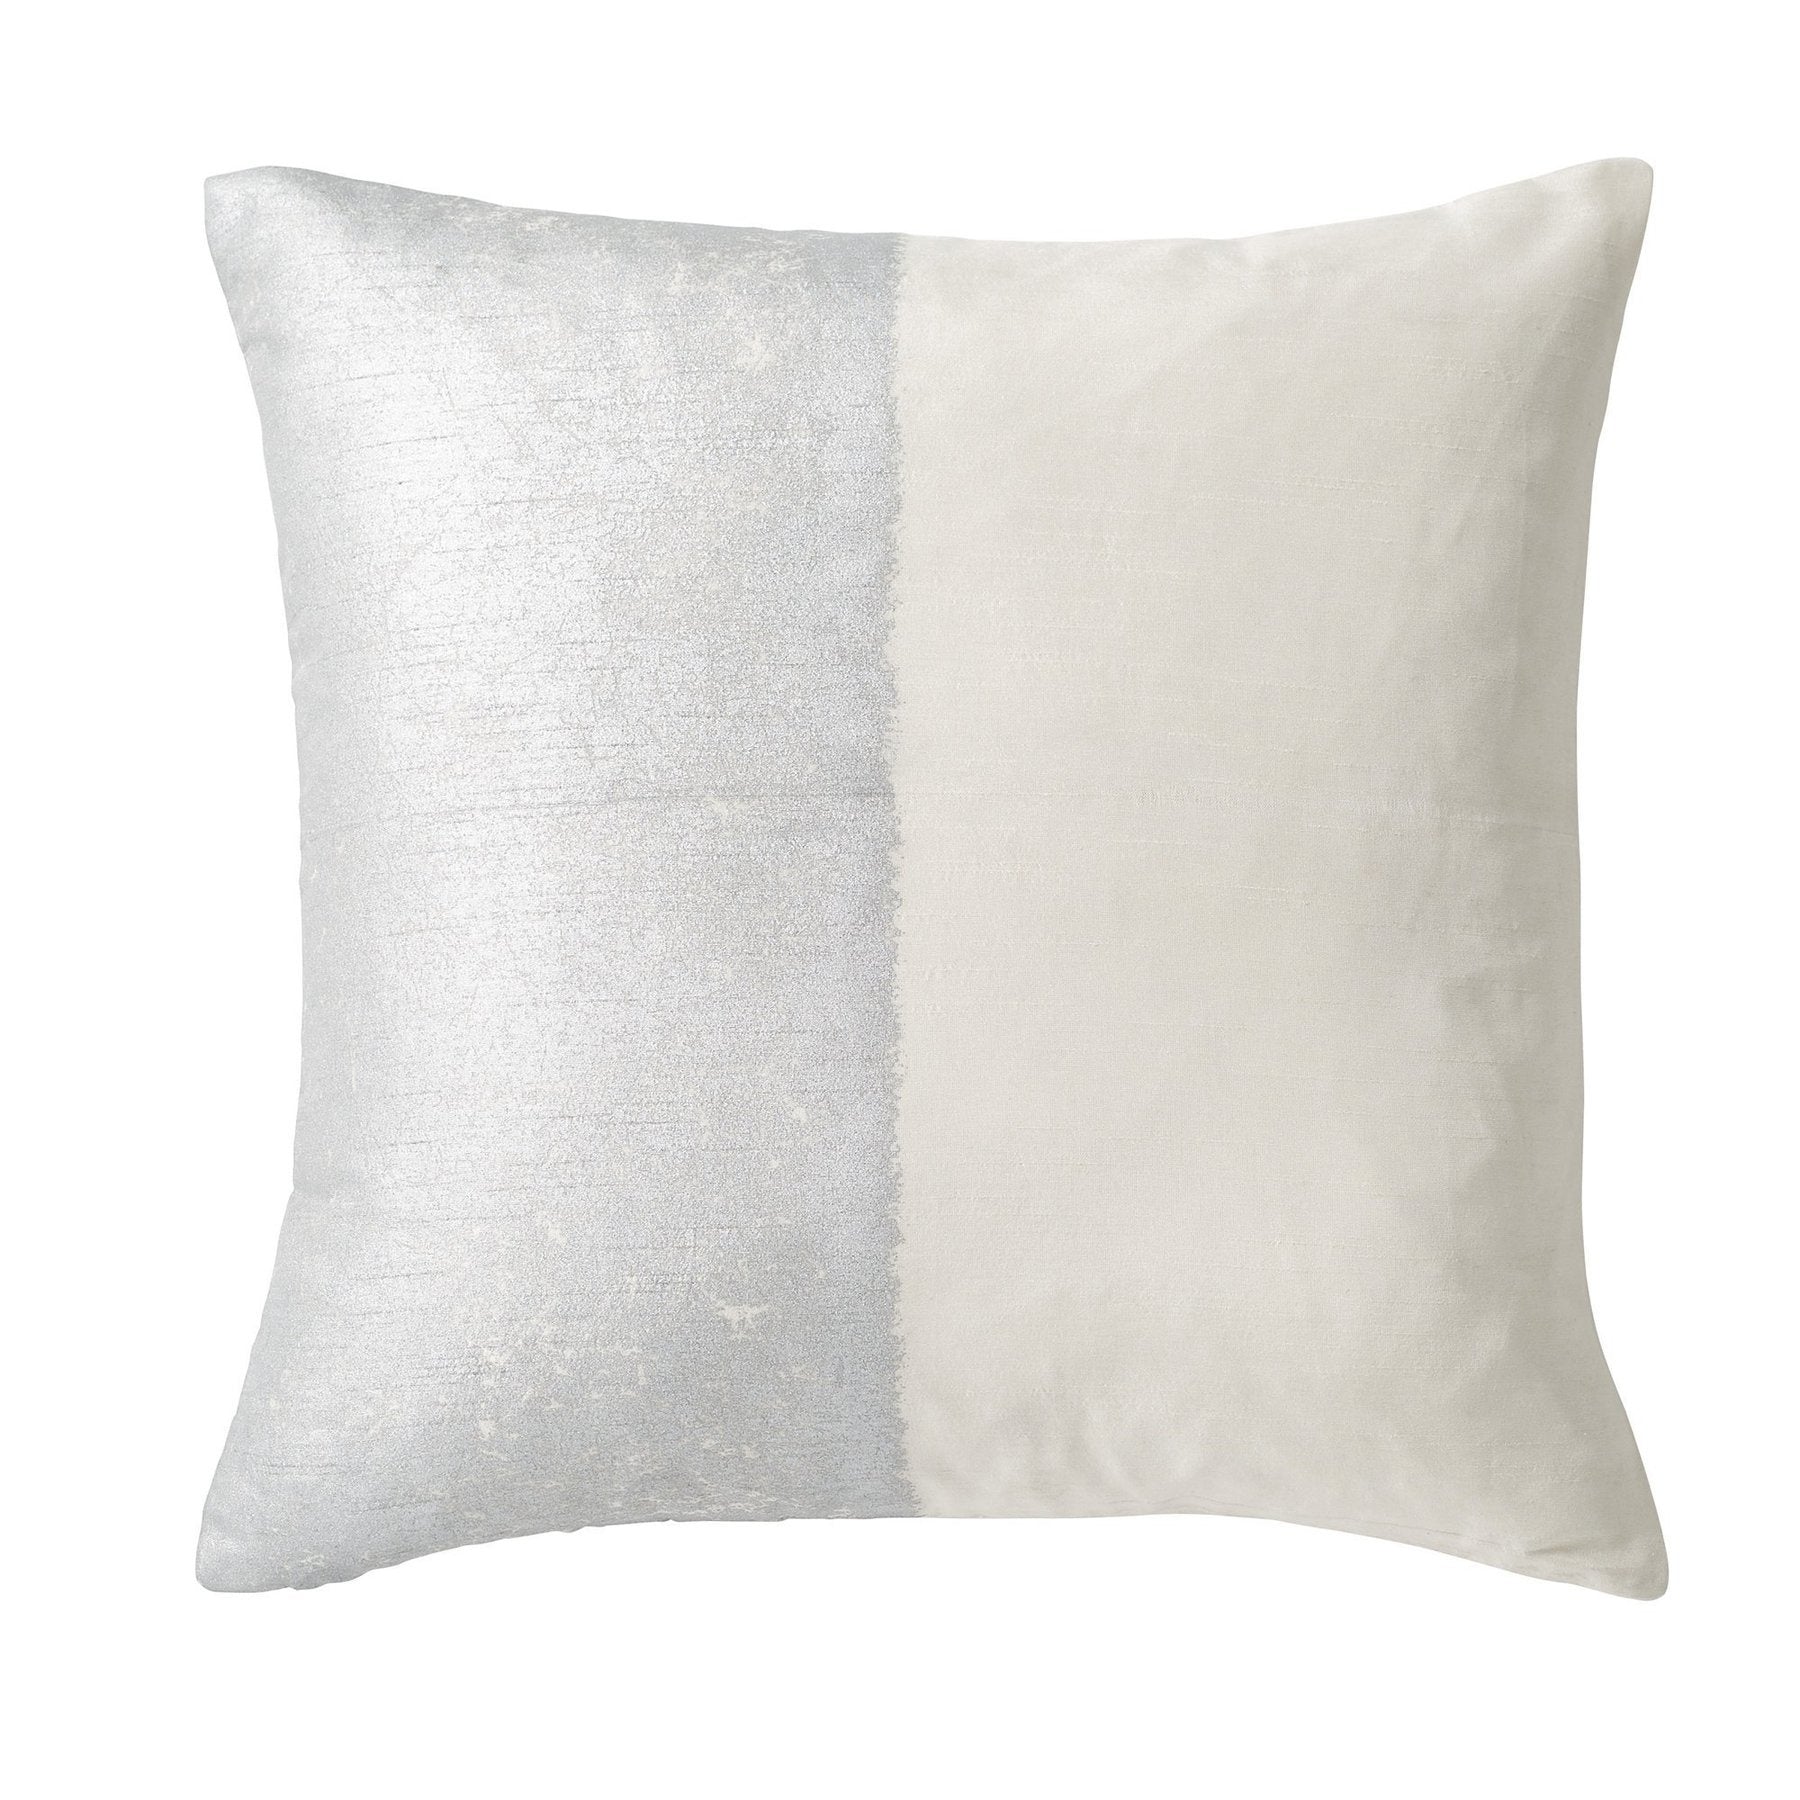 Michael Aram Metallic Texture Pillows